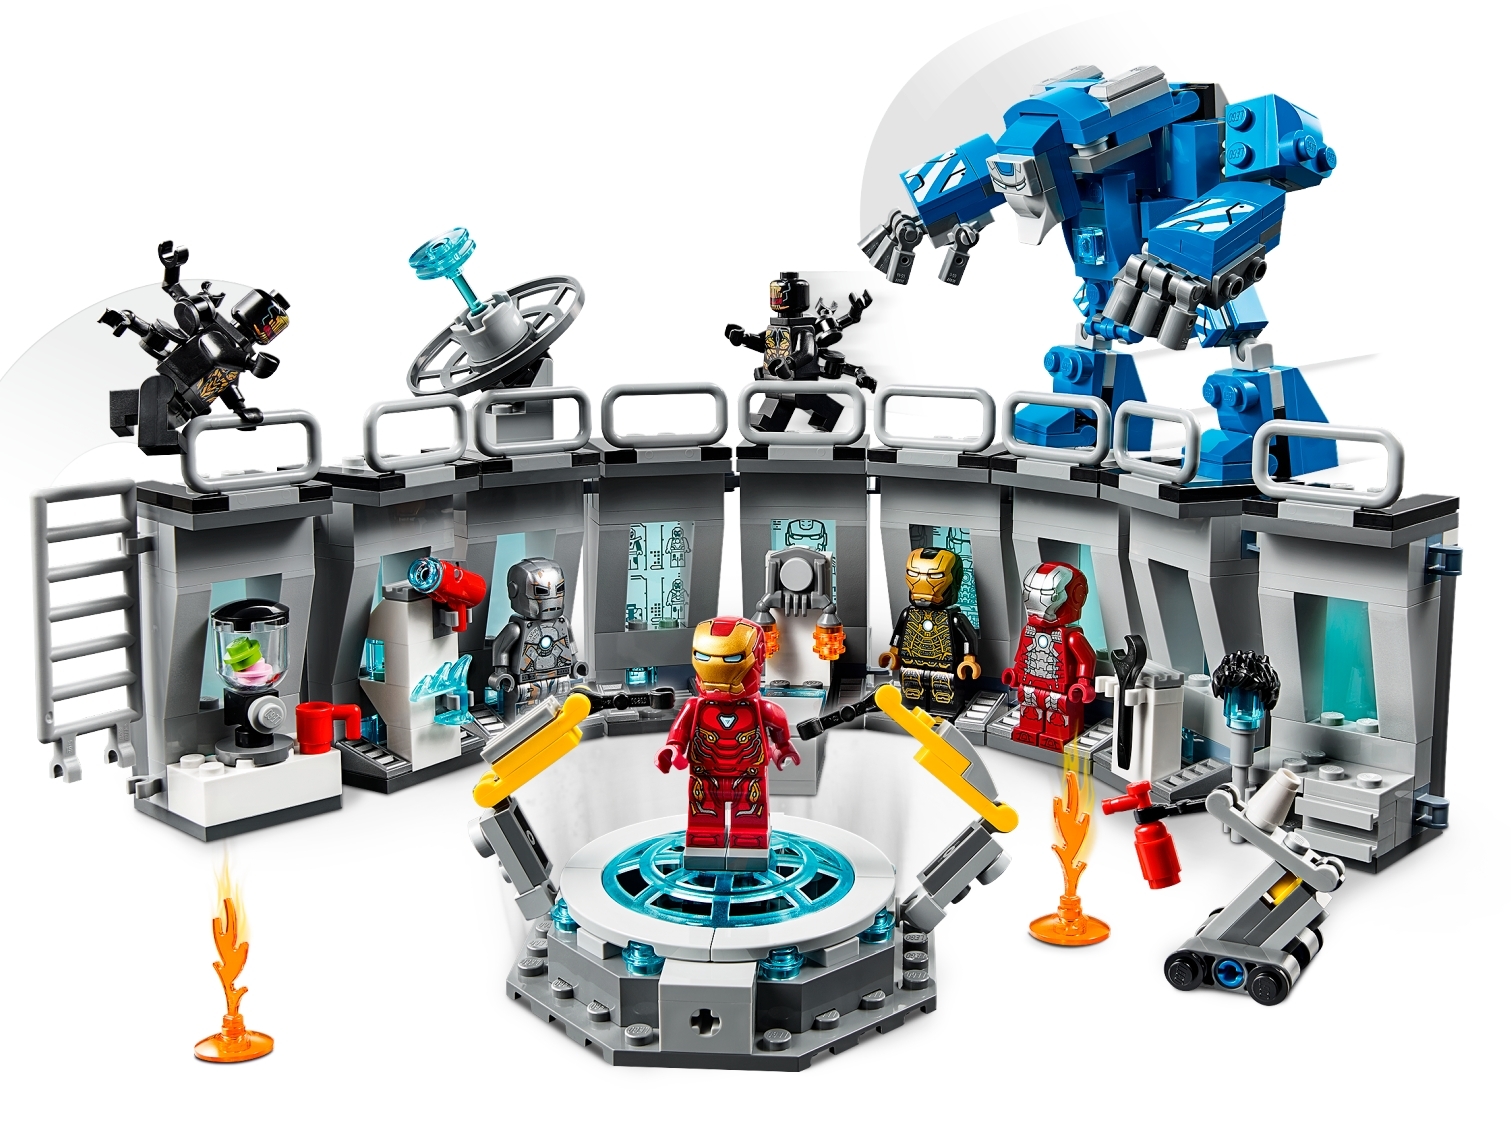 Lego Iron Man MK 1 sh565 Marvel Avengers de 76125 nuevo minifigura Super Heroes